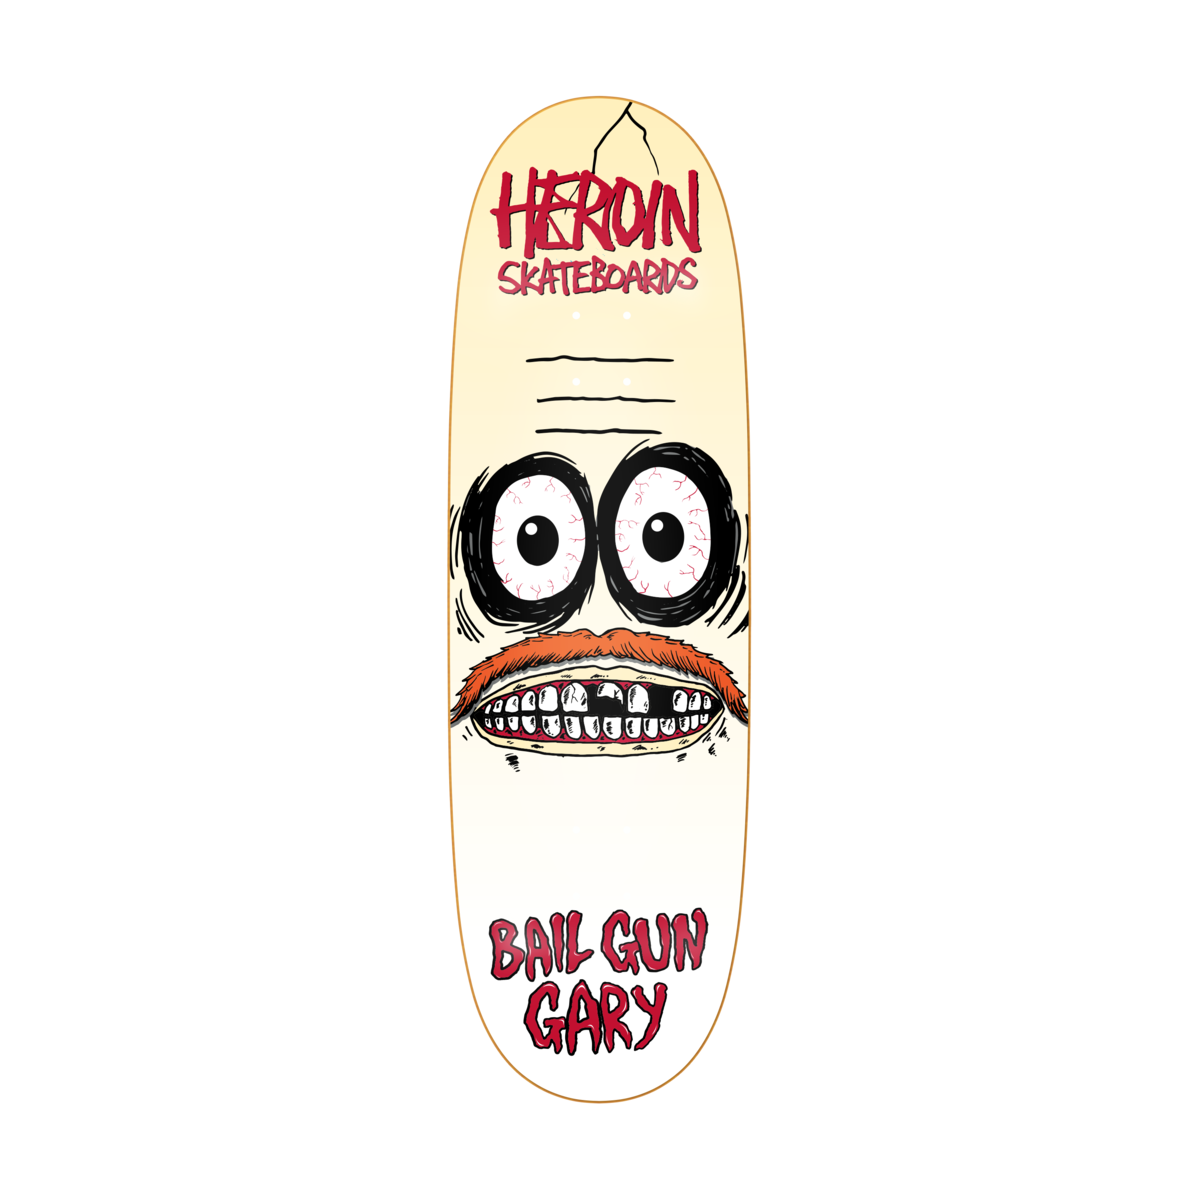 Heroin Bail Gun Gary 3 Symmetrical 9.75" Egg Shaped Skateboard Deck